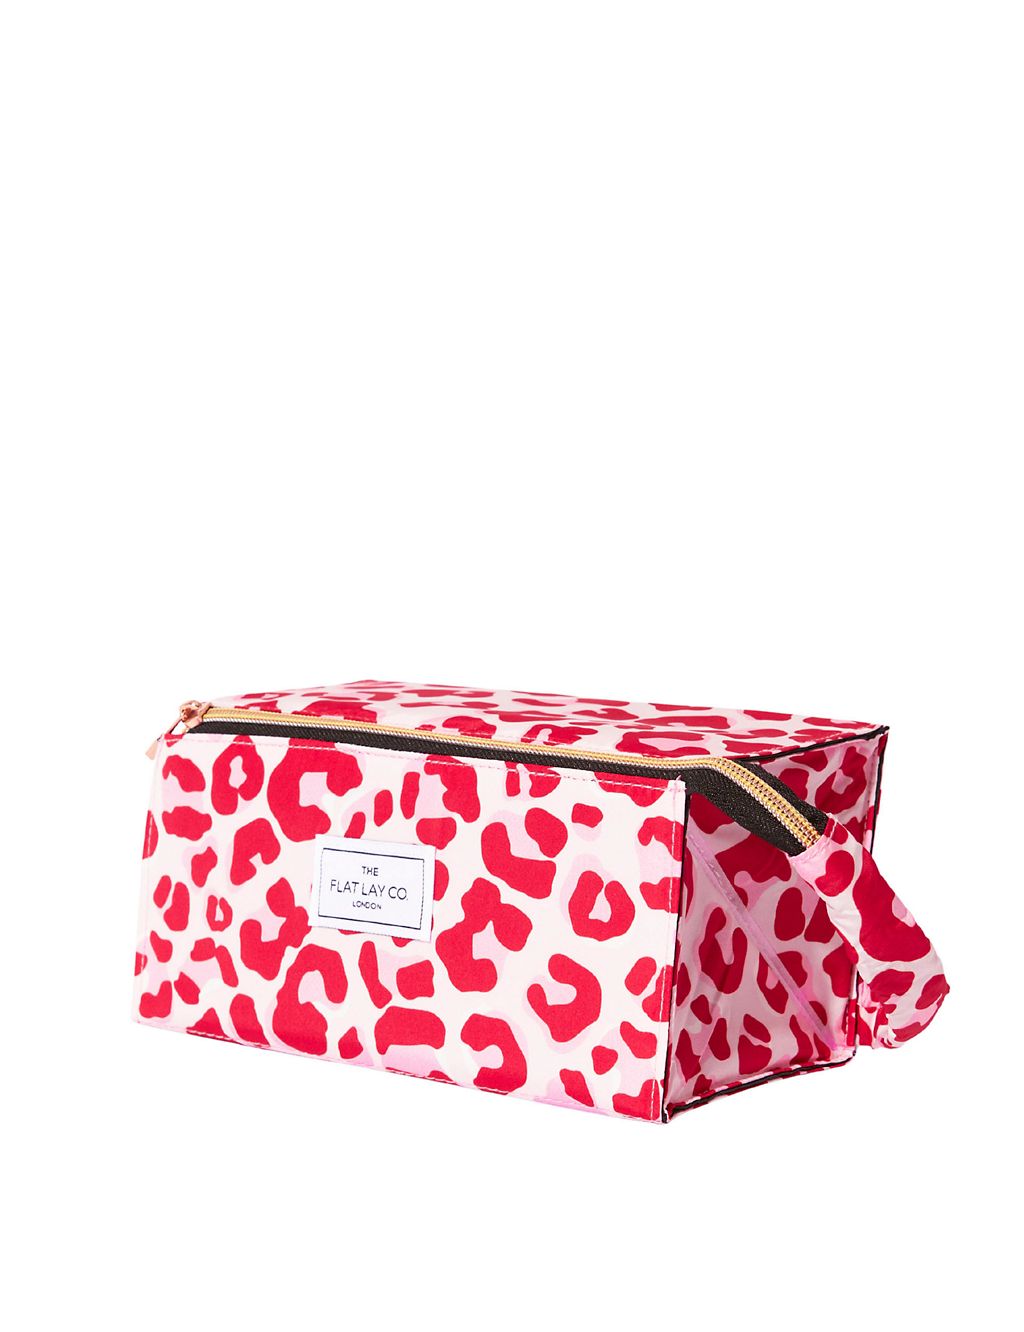 Makeup Box Bag In Pink Leopard 1 of 5